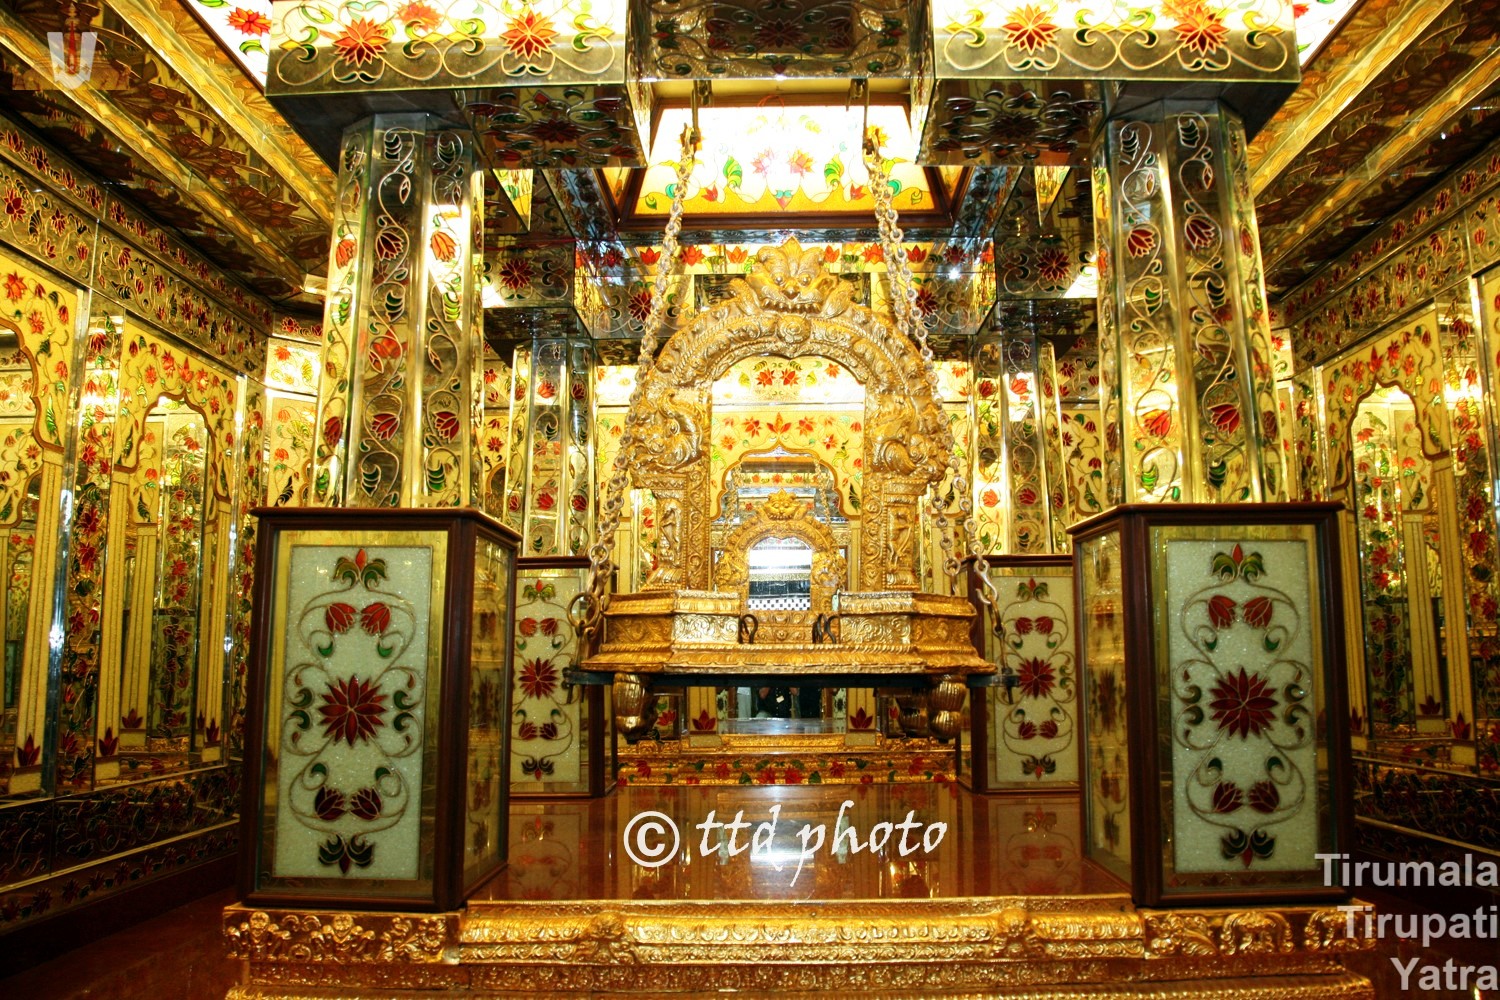 Ayana Mahal or Aina Mahal or addala mandapam - Mirror hall Inside Tirumala temple